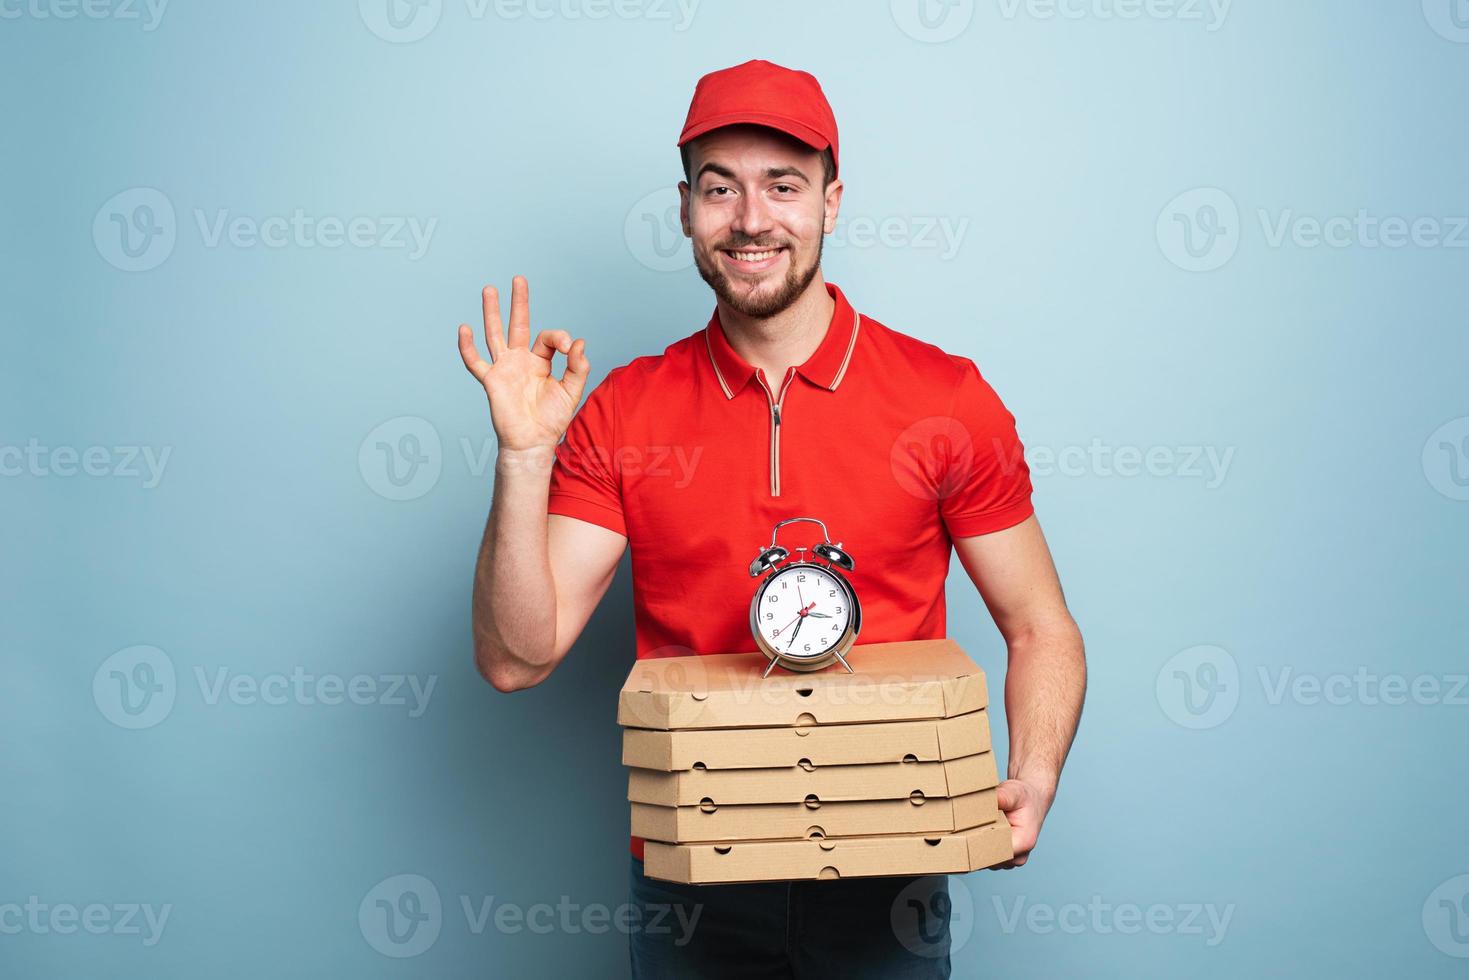 correio é pontual para entregar rapidamente pizzas. ciano fundo. foto